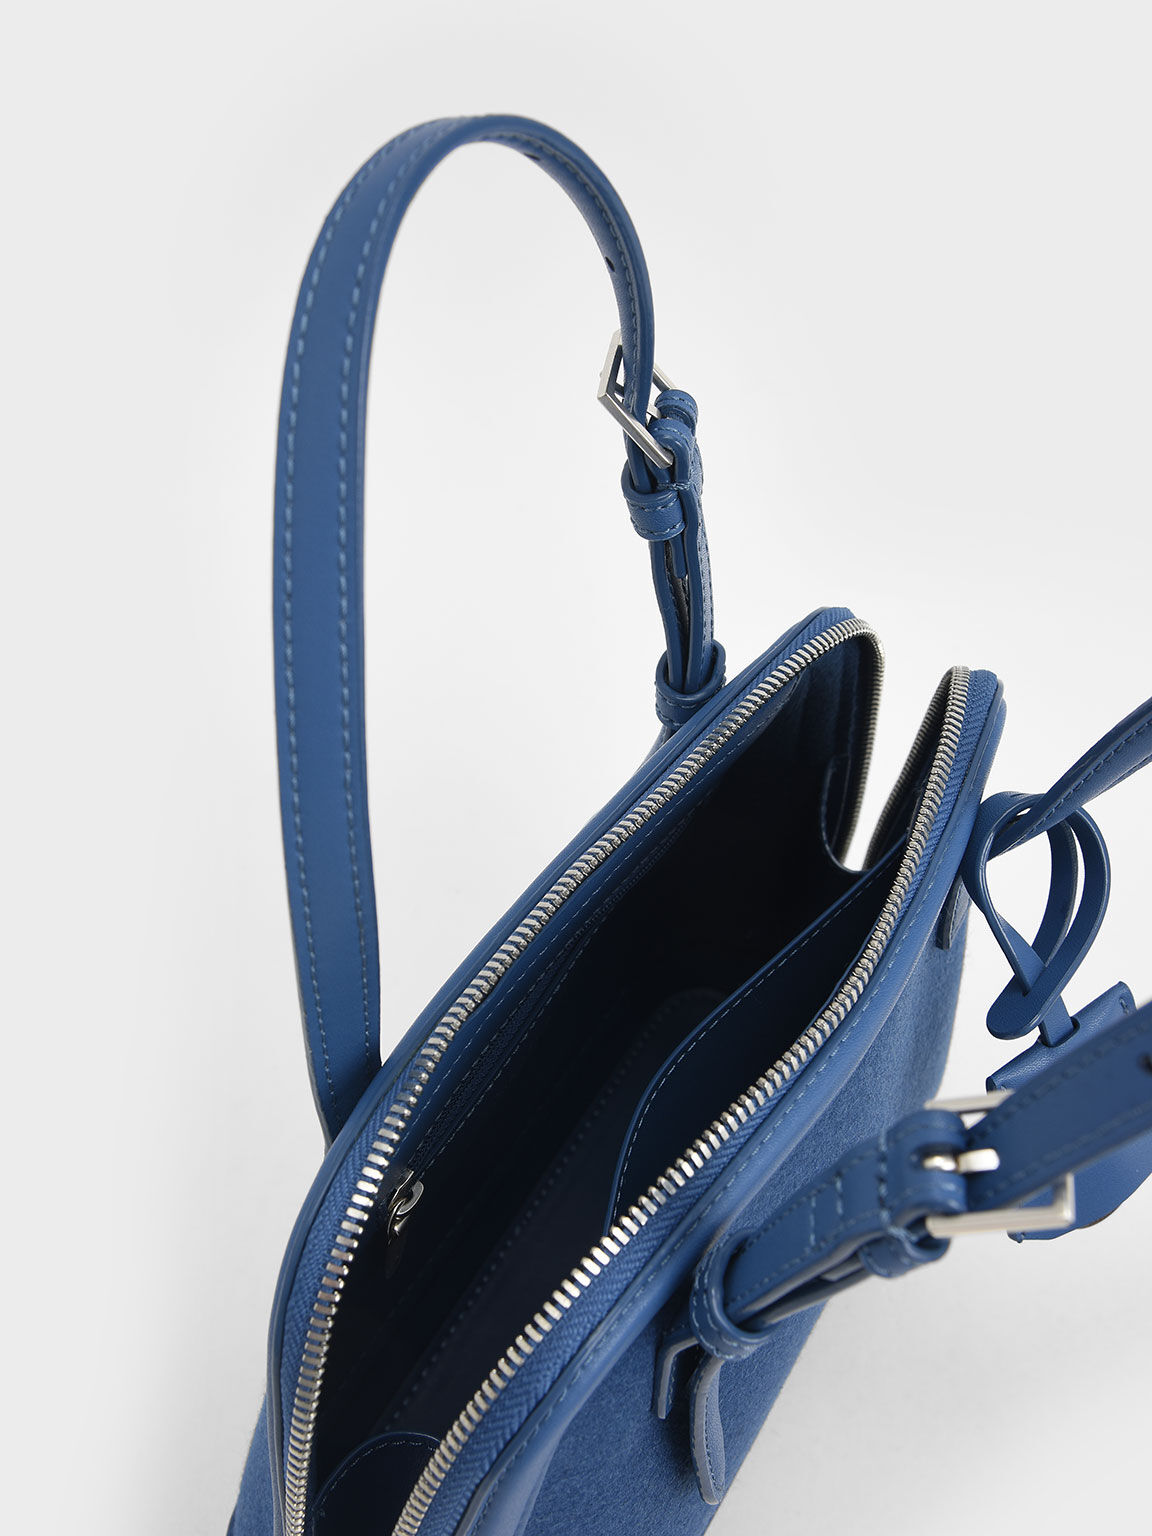 Enola Textured Double Handle Structured Bag, Blue, hi-res